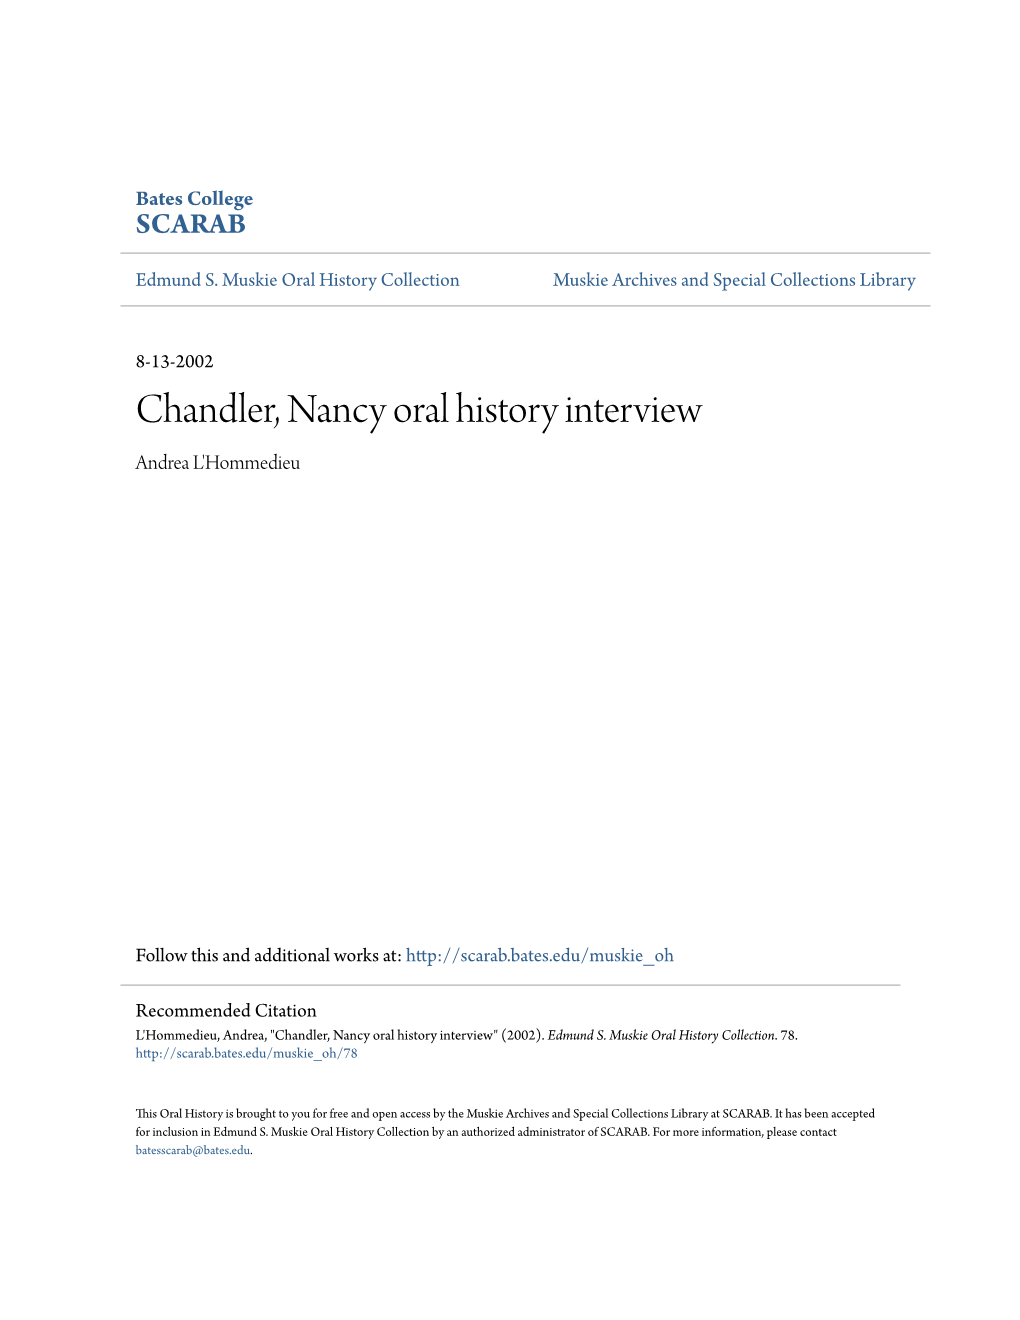 Chandler, Nancy Oral History Interview Andrea L'hommedieu